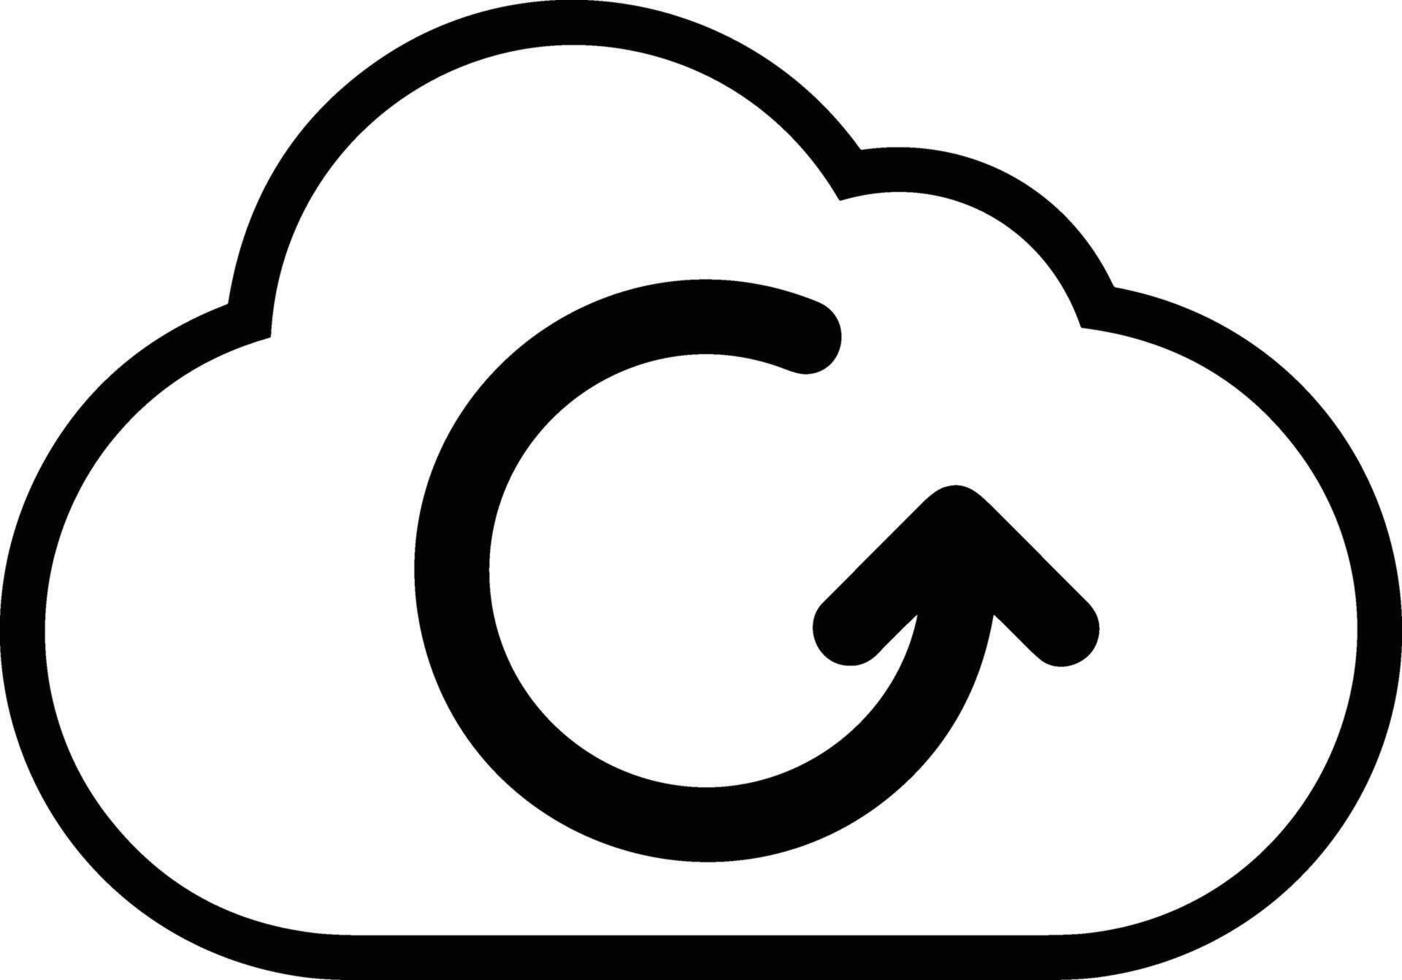 Wolke Symbol Symbol Vektor Bild. Illustration von das Hosting Lager Design Bild